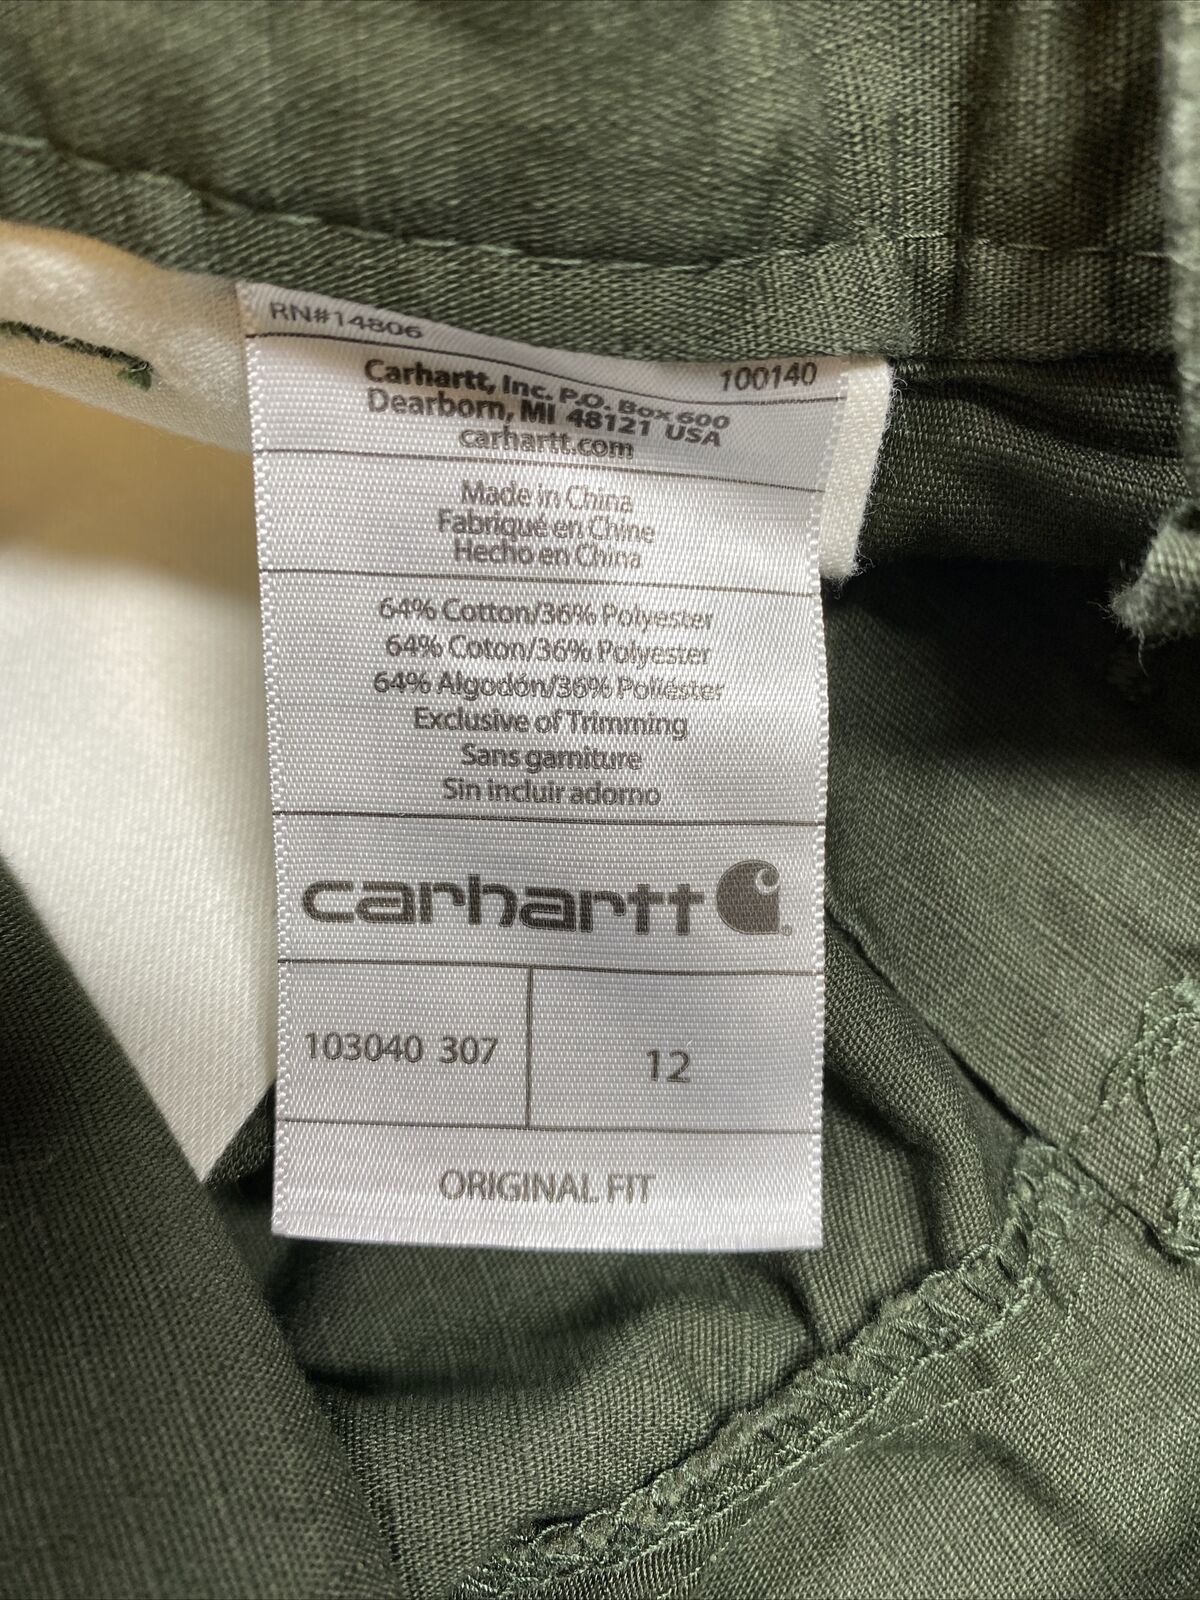 Carhartt Women's Green Original Fit Casual Shorts - 12